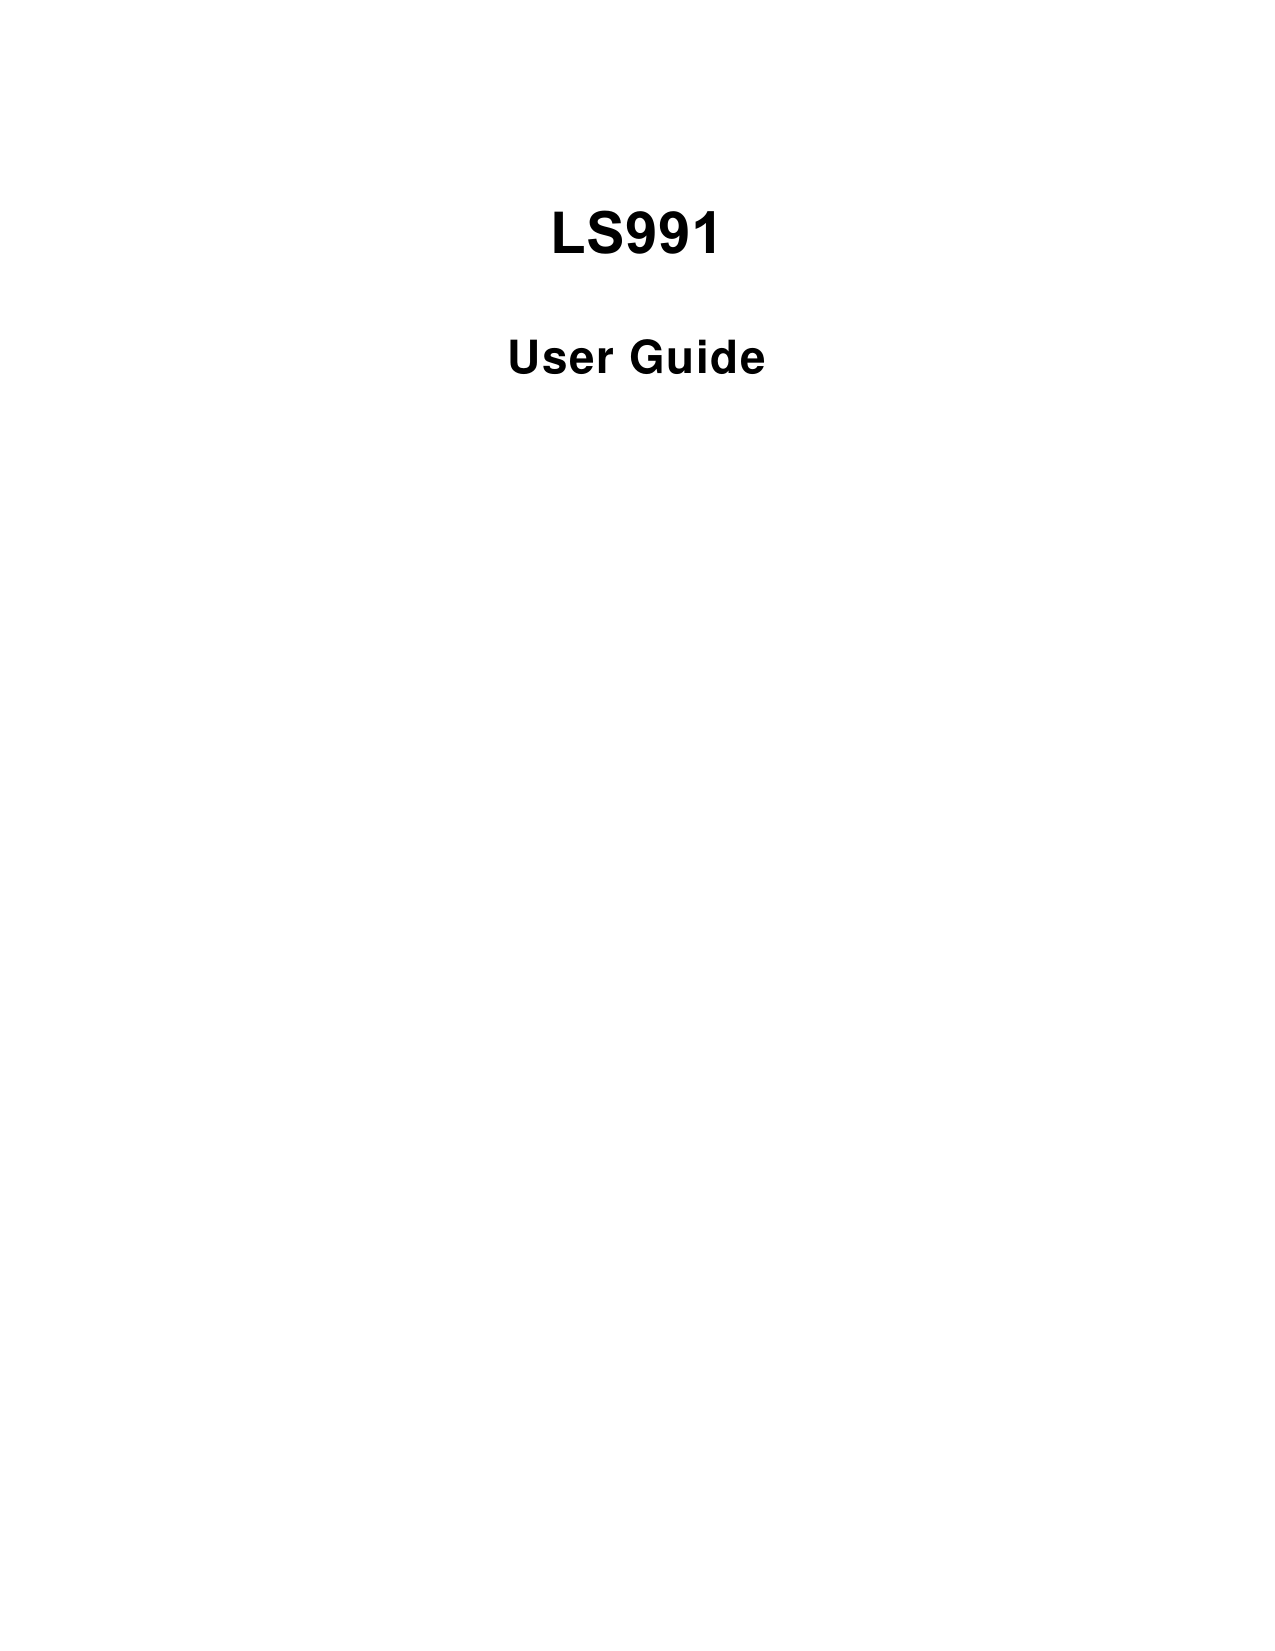 LS991 User Guide 